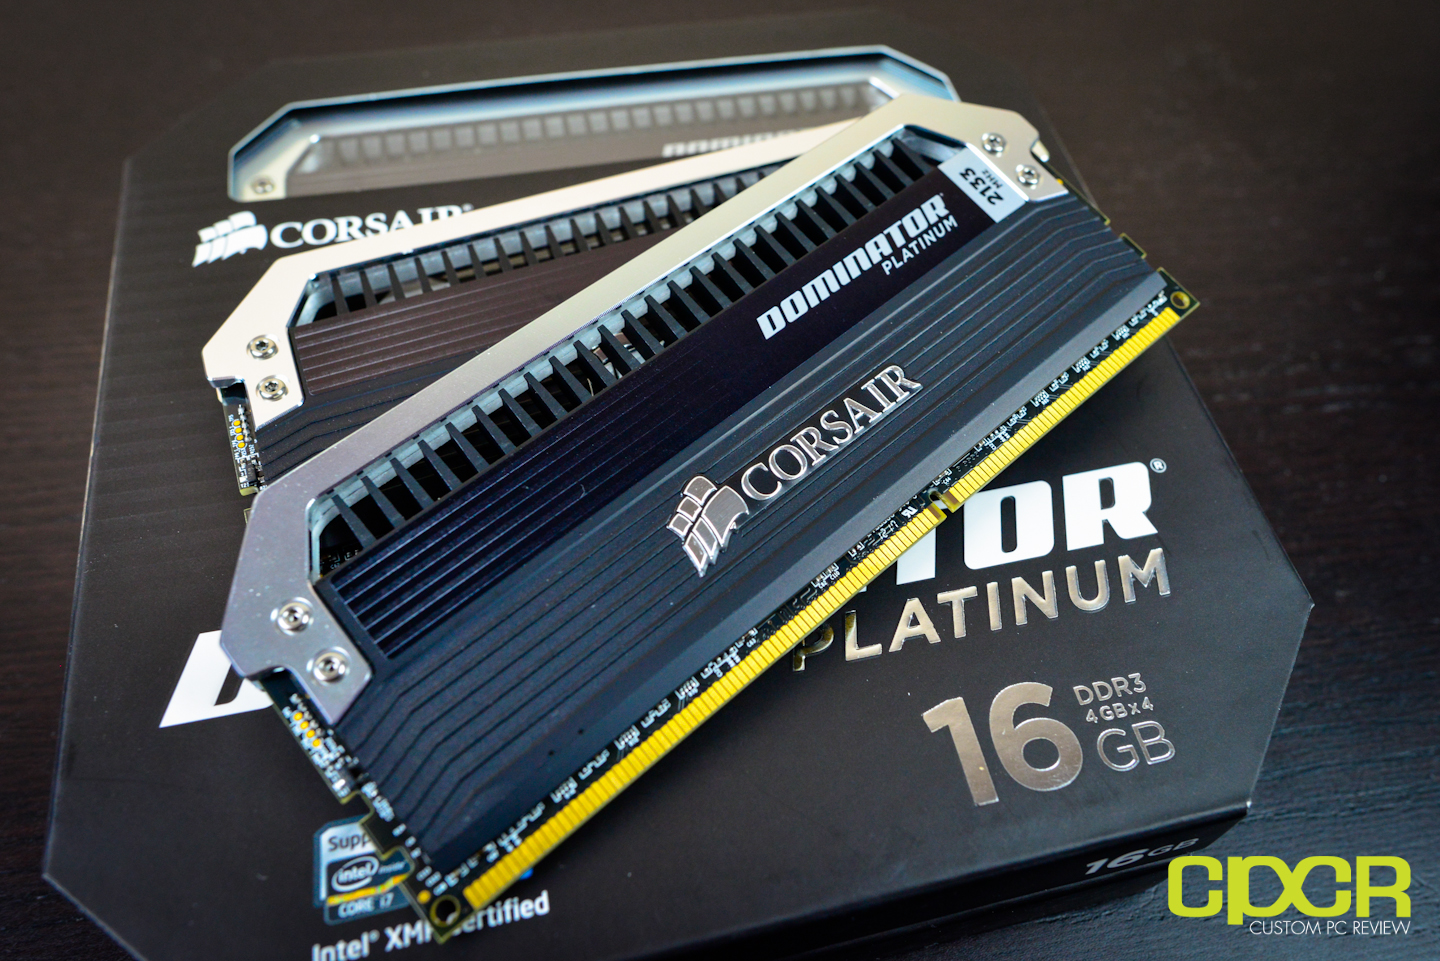 Corsair Dominator Platinum DDR3 2133MHz 16GB Kit Review